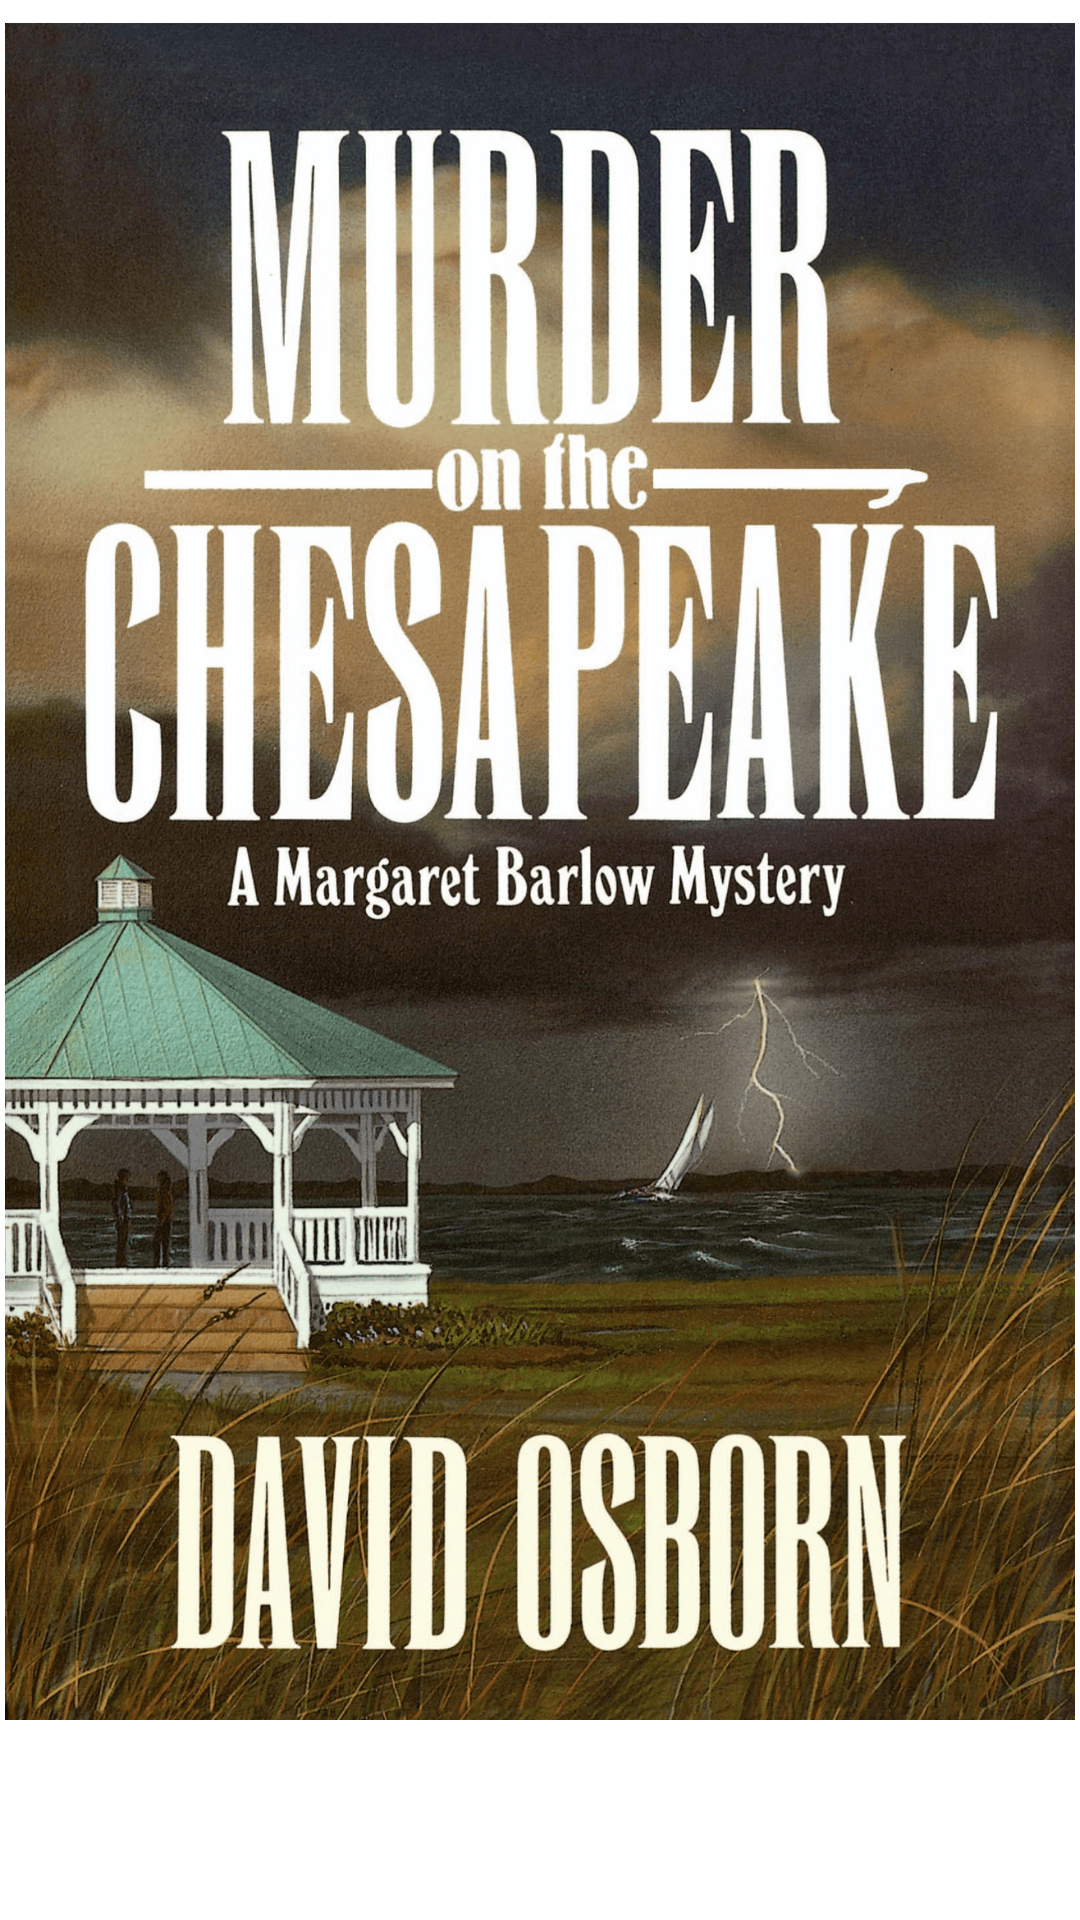 Murder on the Chesapeake by David Osborn